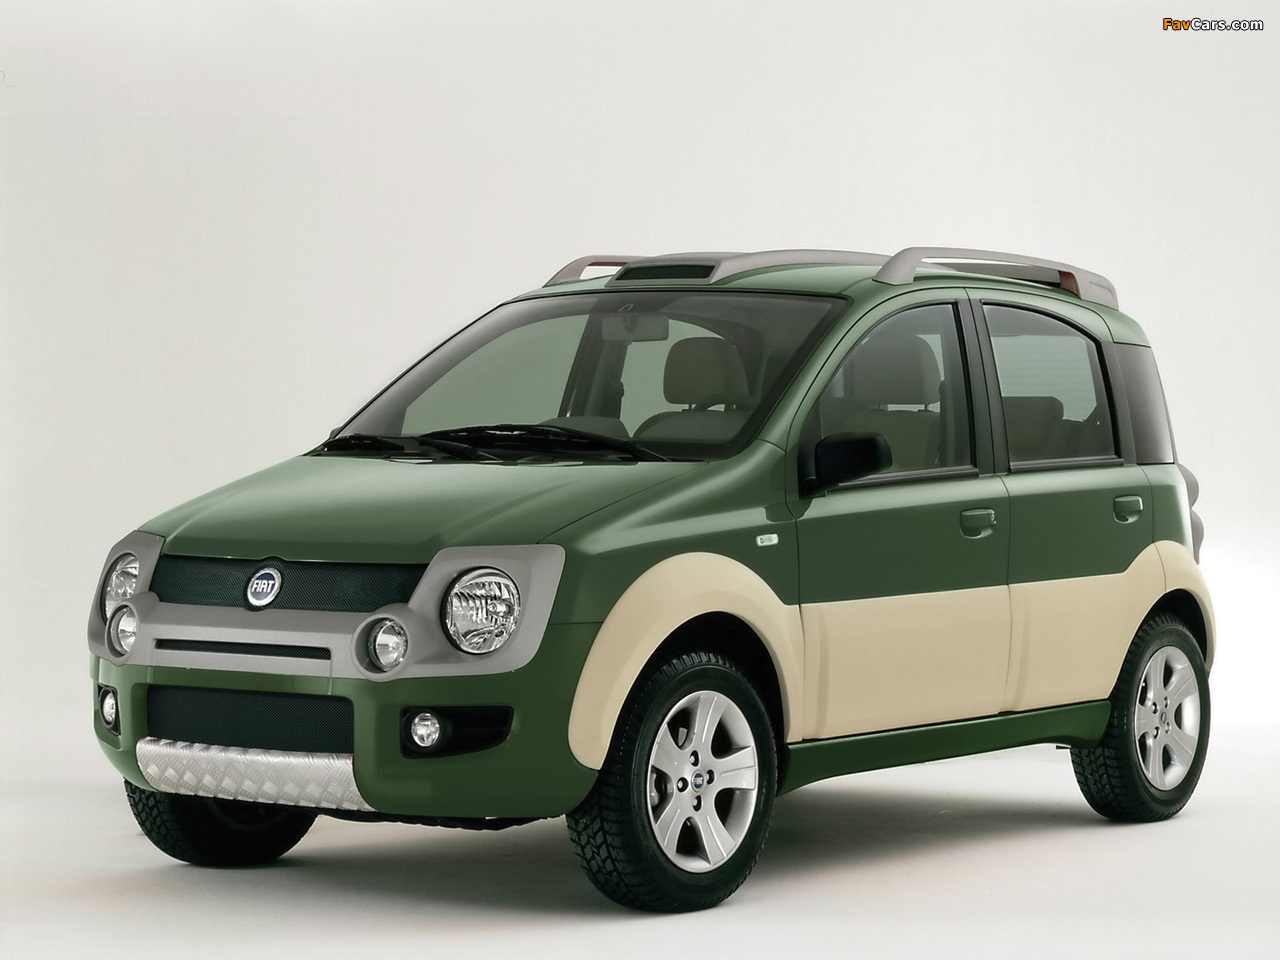 Fiat Panda SUV Concept (169) 2003 photos (1280 x 960)